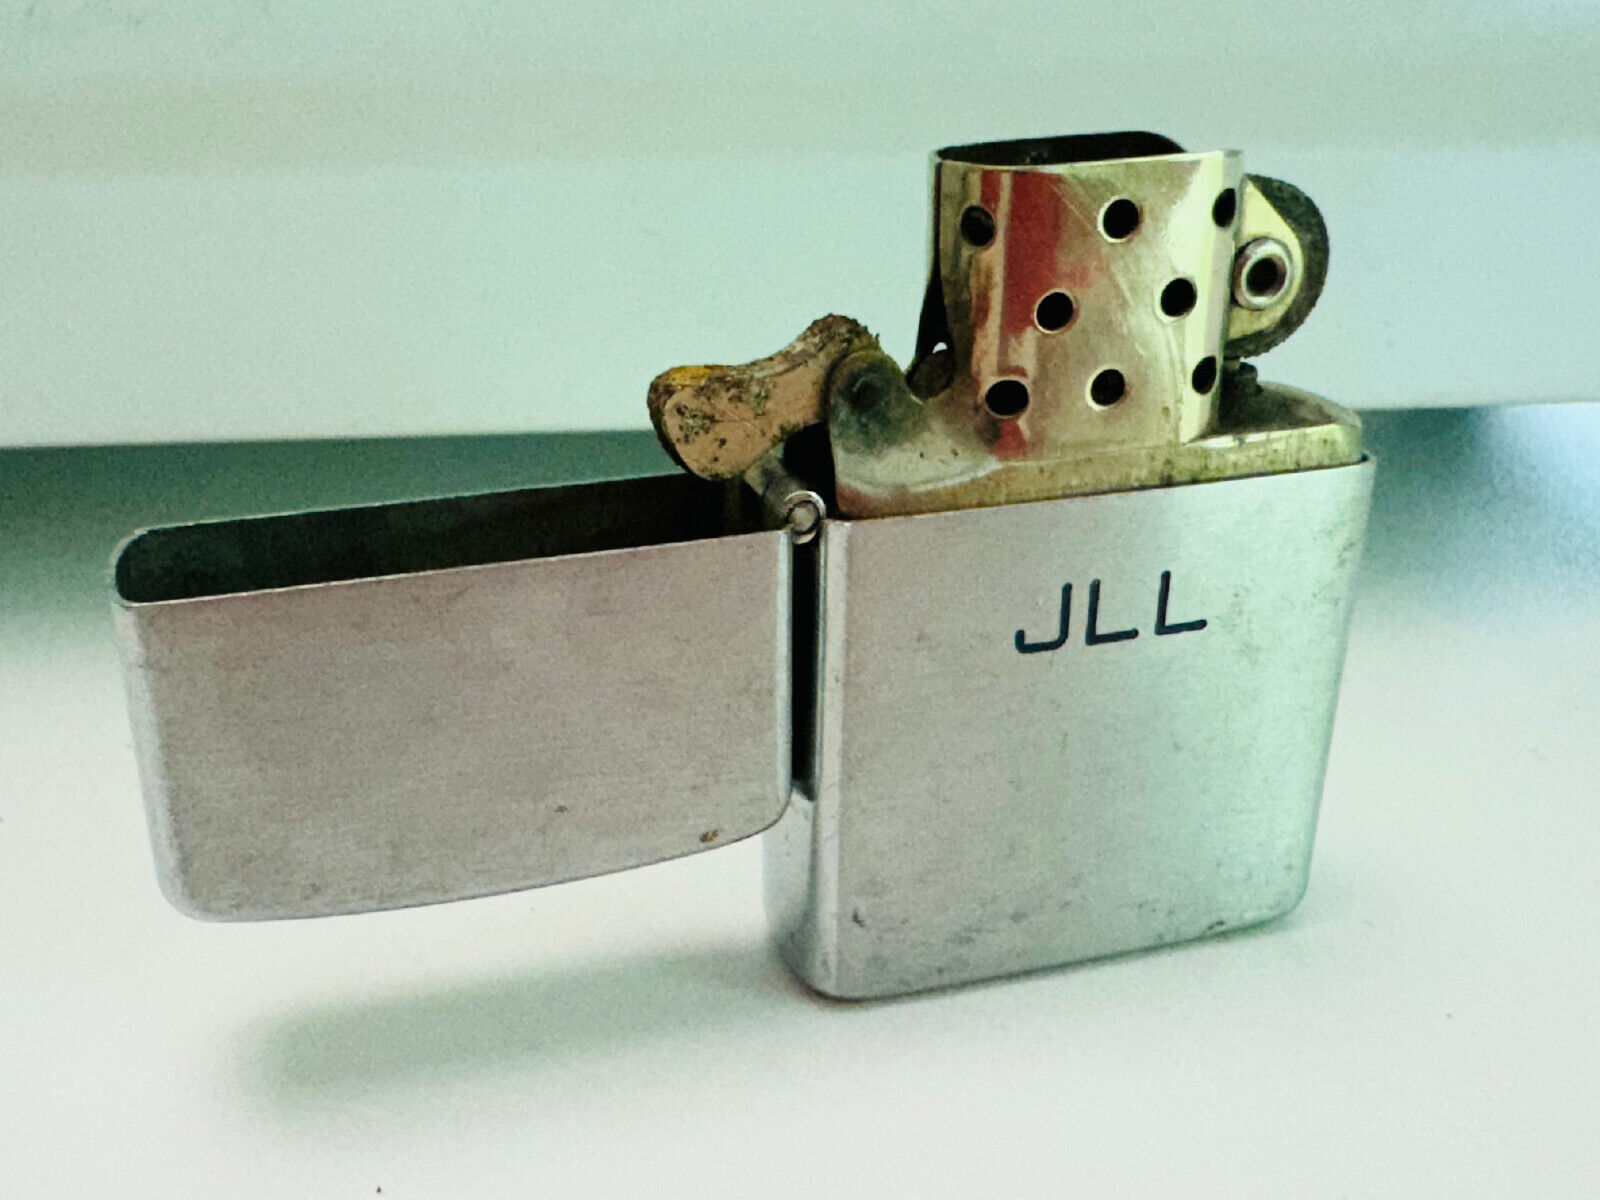 Old Vtg 1940's ZIPPO Cigarette Lighter 3-Barrel Pat. 2032695 W/ Initials JLL